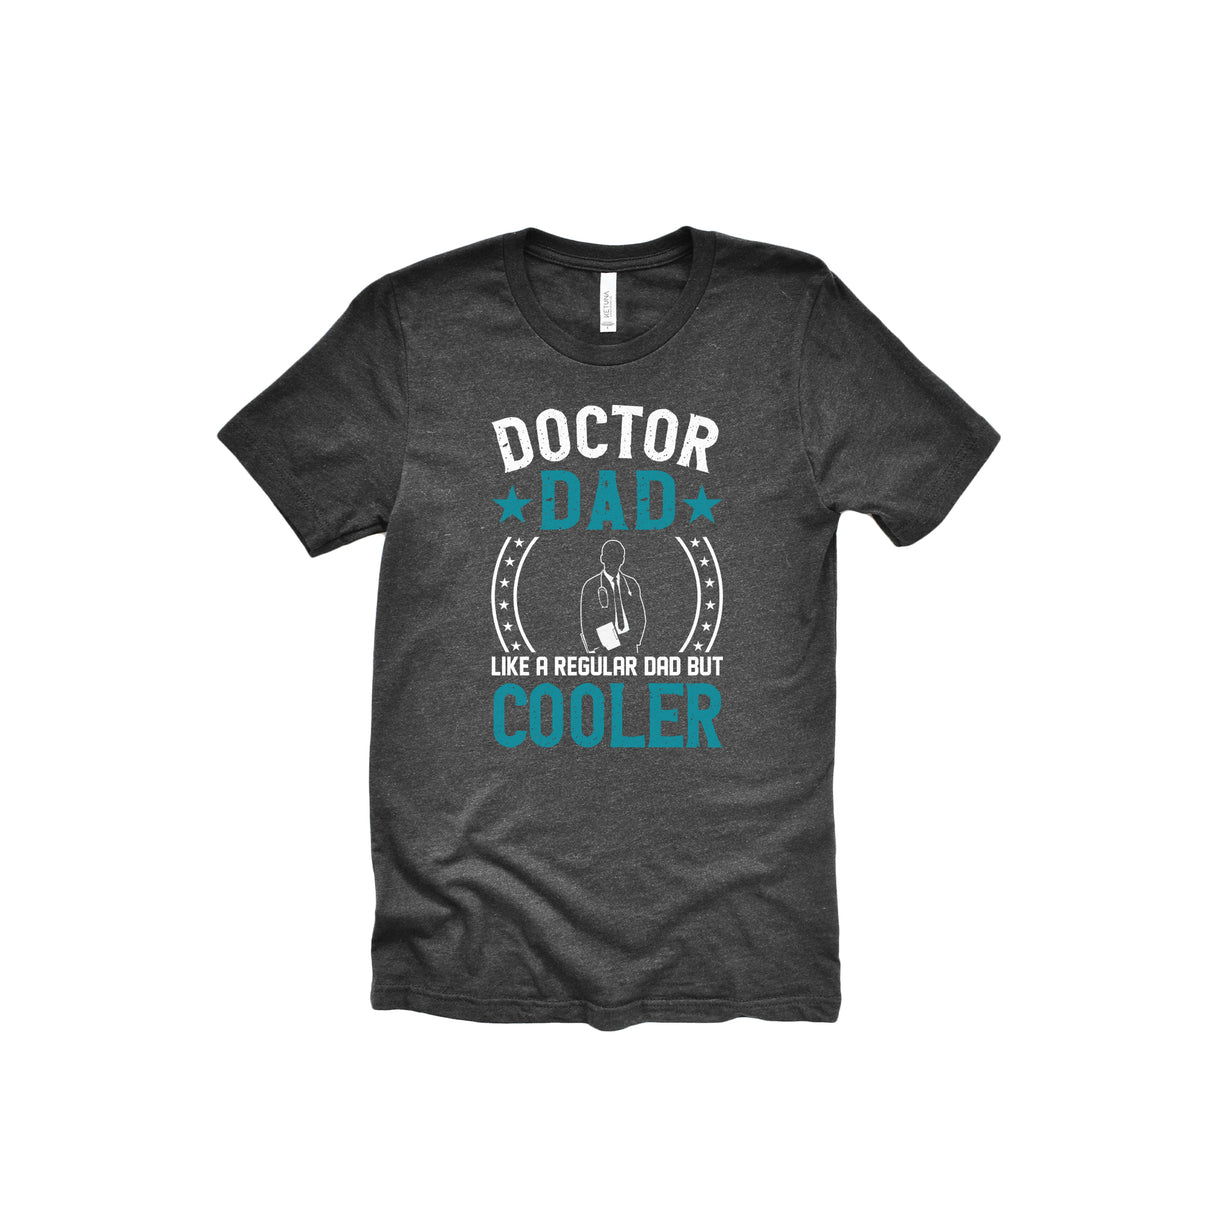 Doctor Dad Like A Regular Dad But Cooler Adult T-Shirt